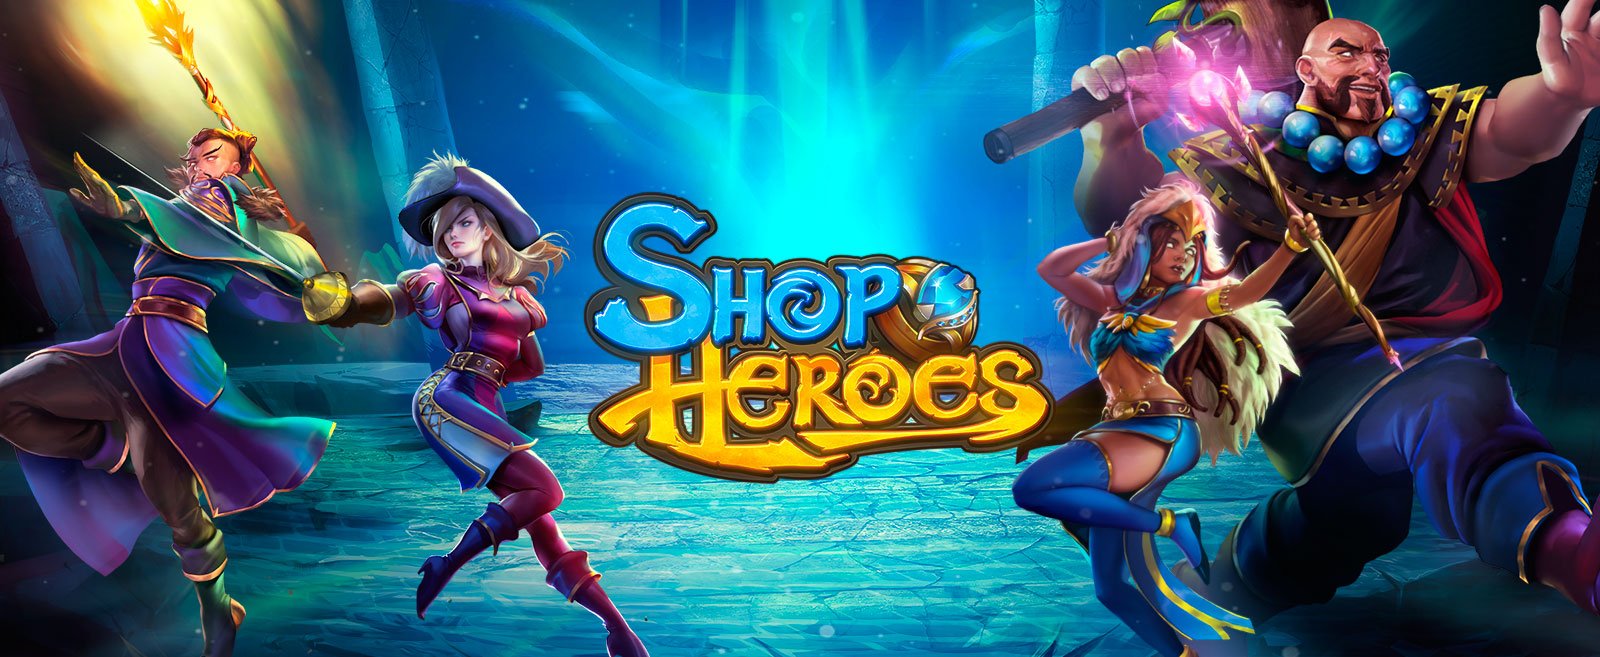 Image of Shop Heroes